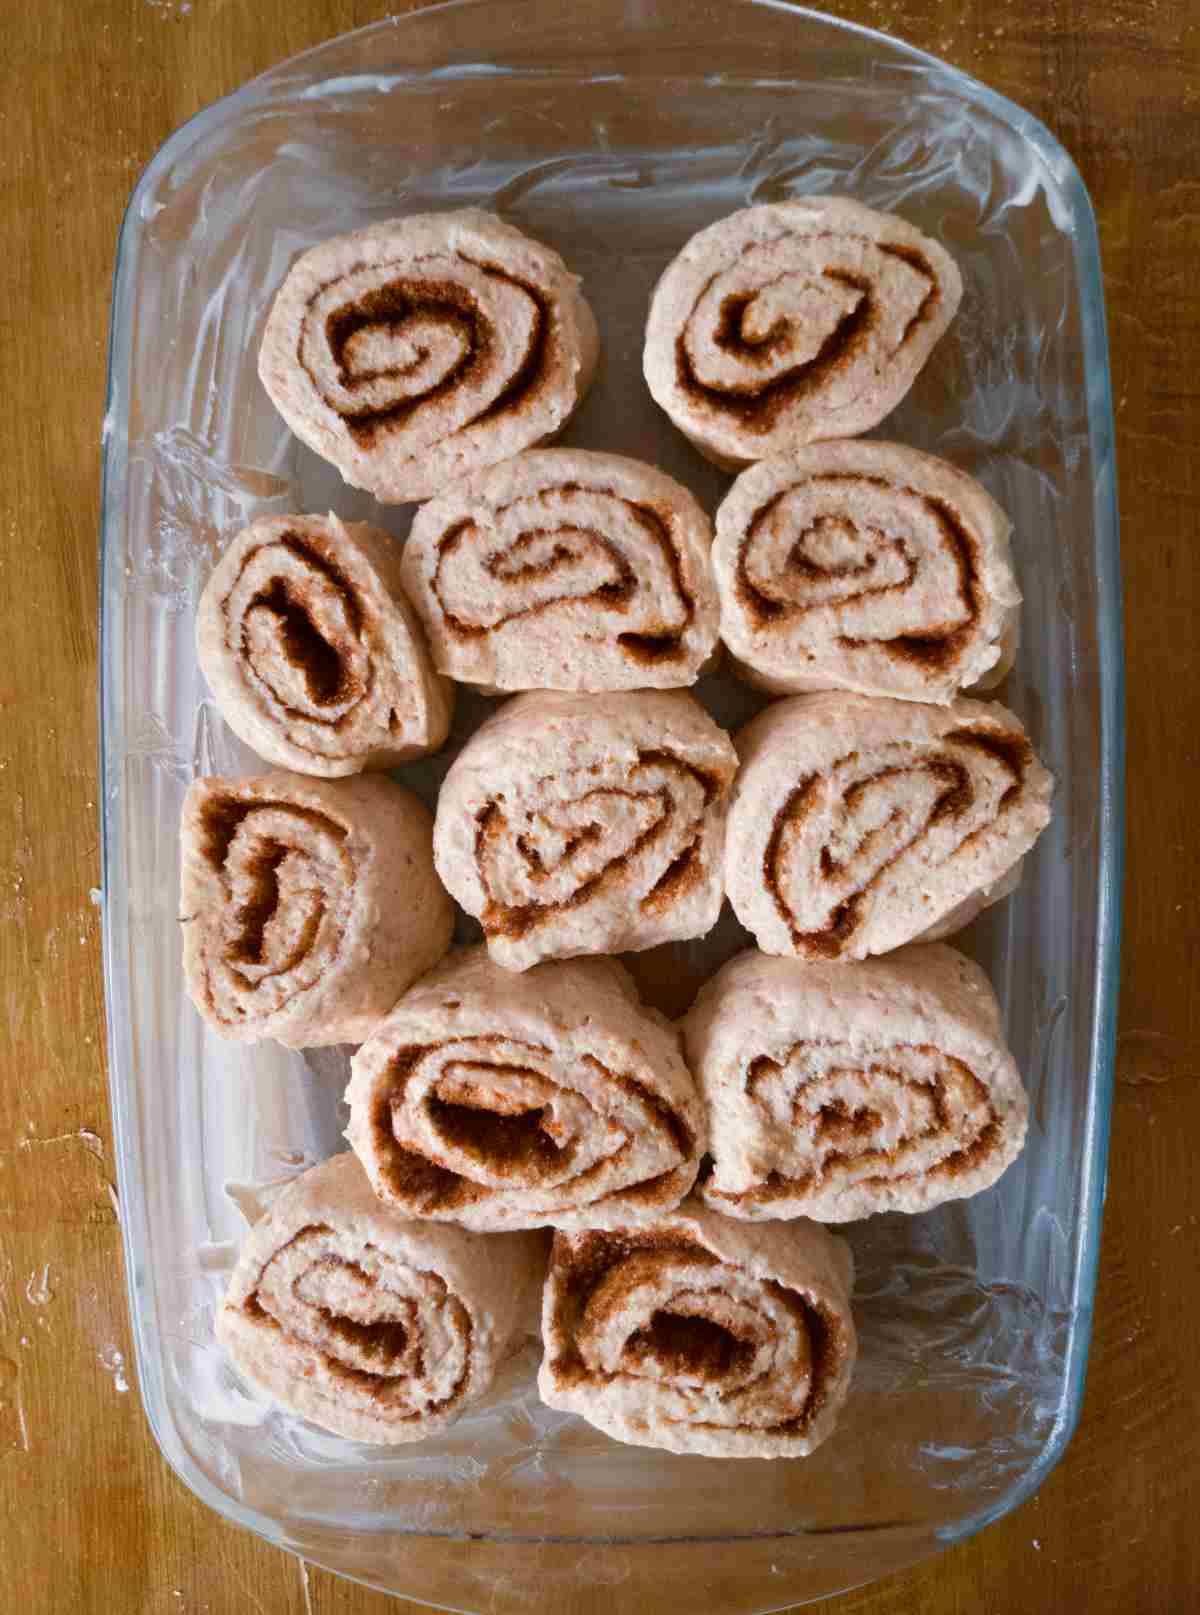 Cinnamon rolls in the baking dish.